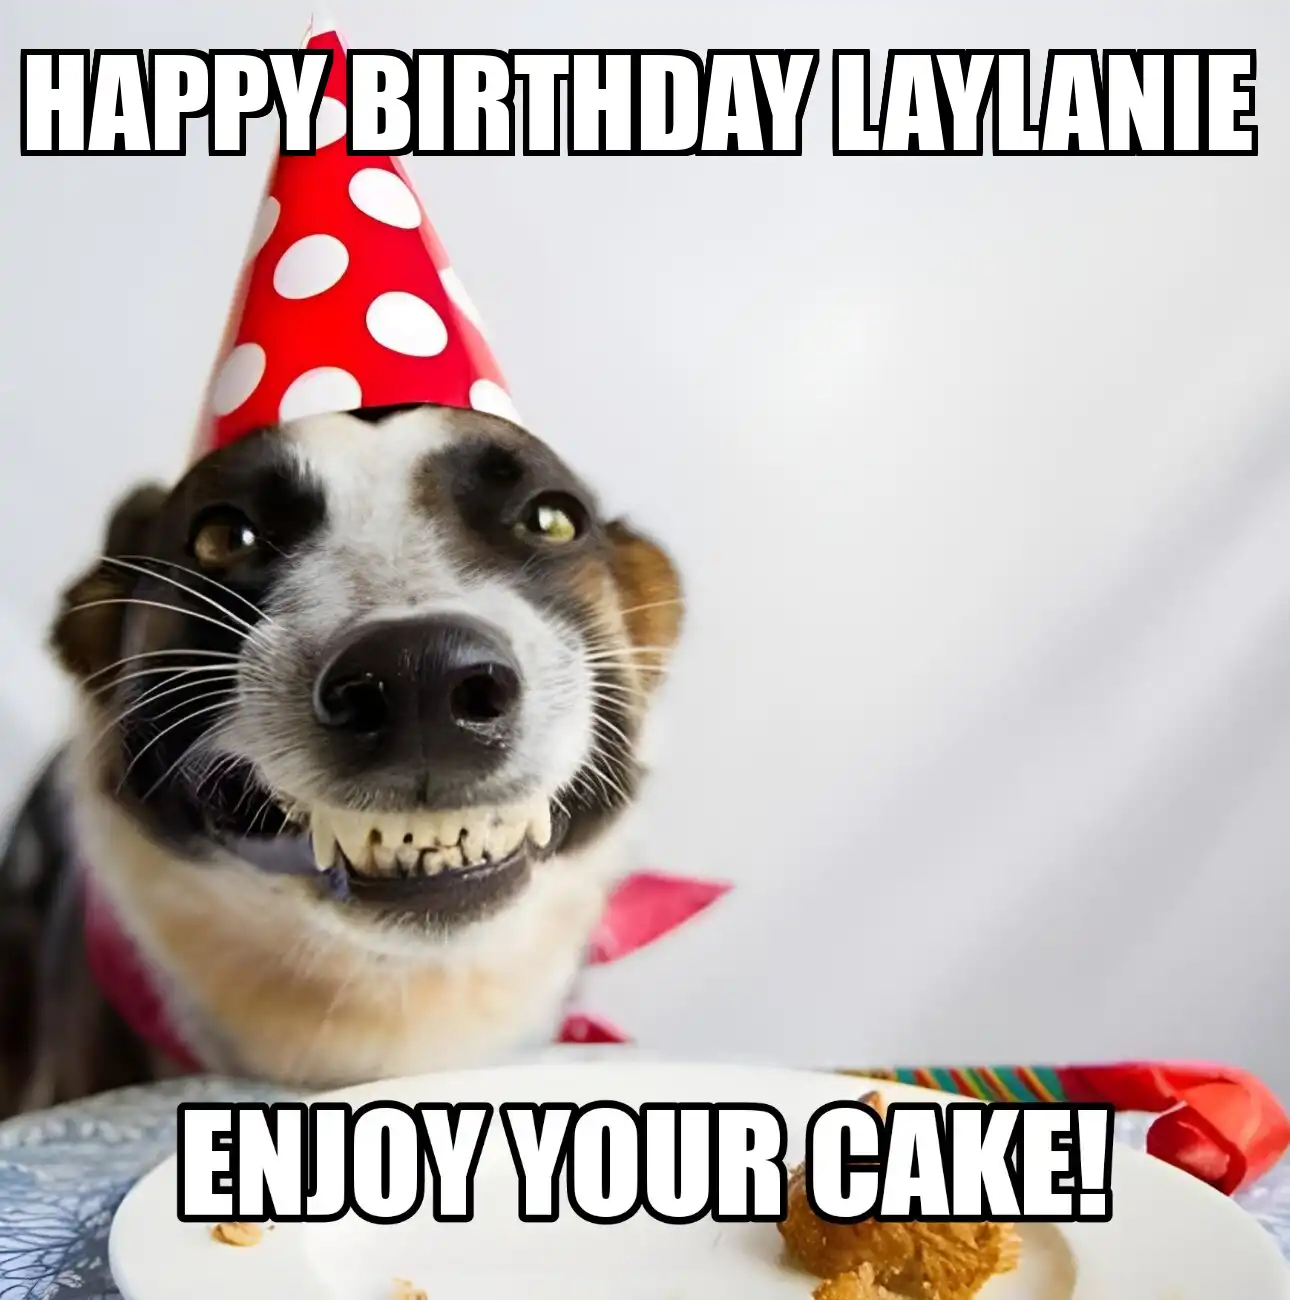 Happy Birthday Laylanie Enjoy Your Cake Dog Meme